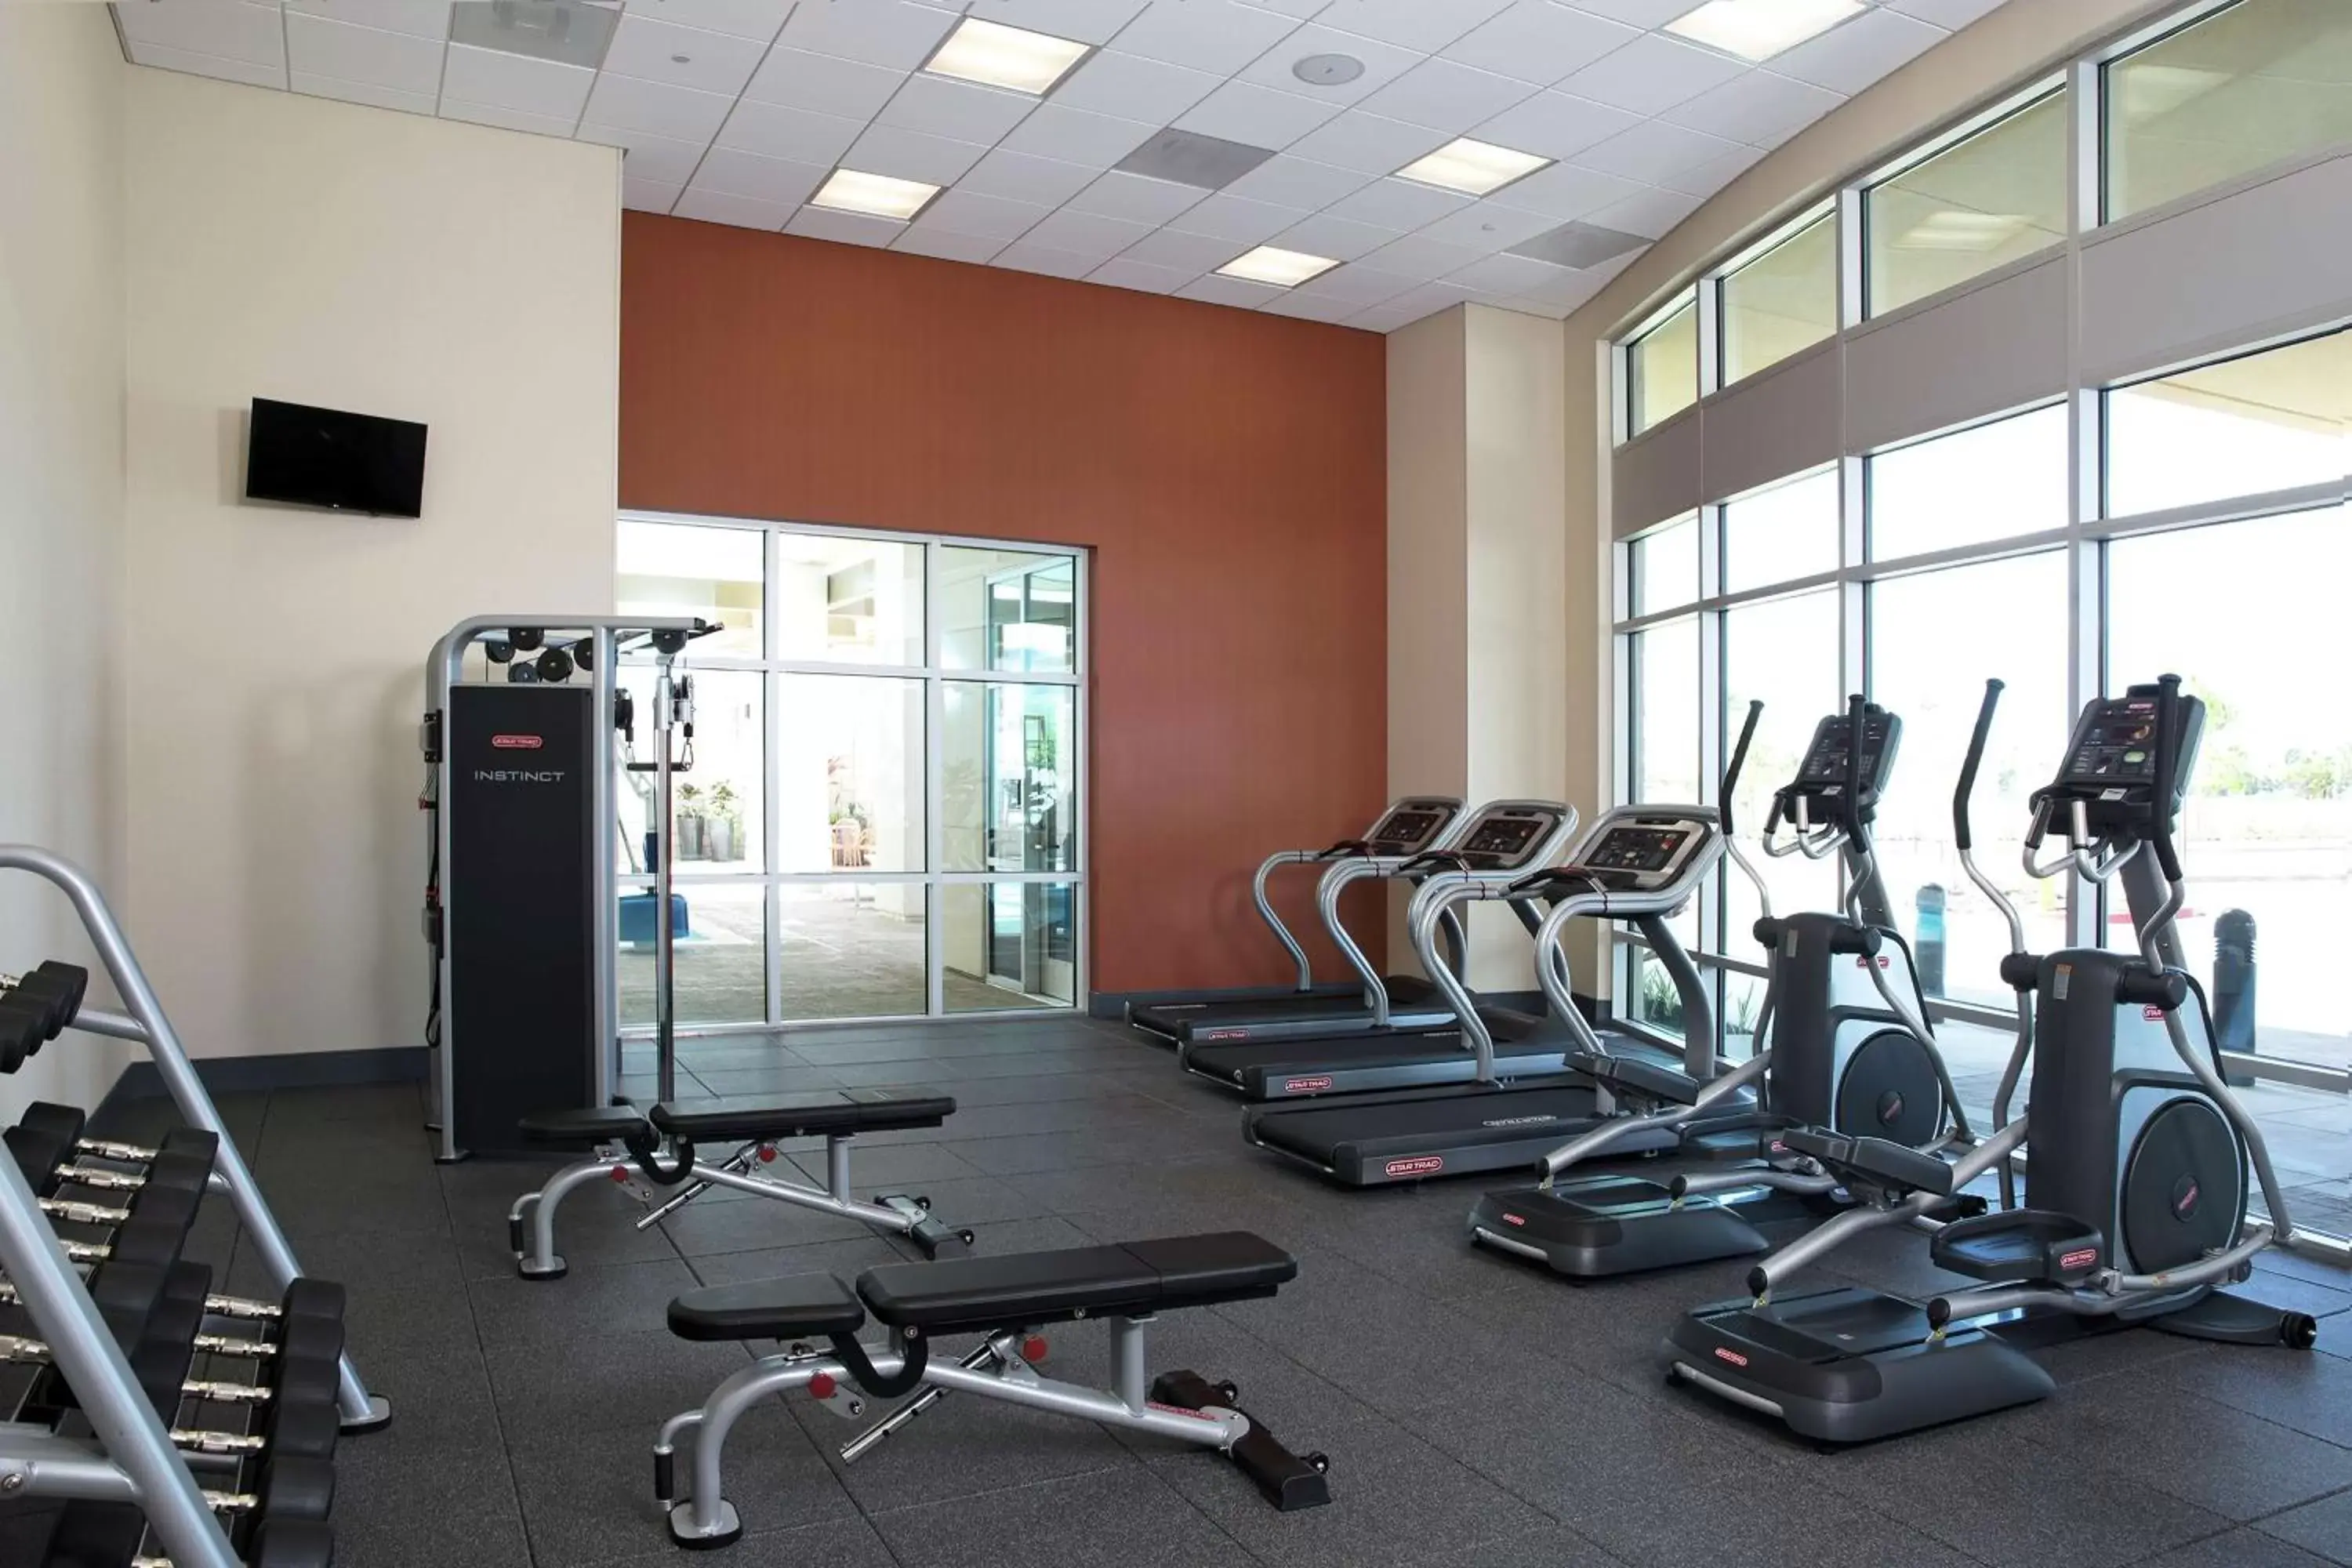 Fitness centre/facilities, Fitness Center/Facilities in Hampton Inn & Suites Oahu/Kapolei, HI - FREE Breakfast